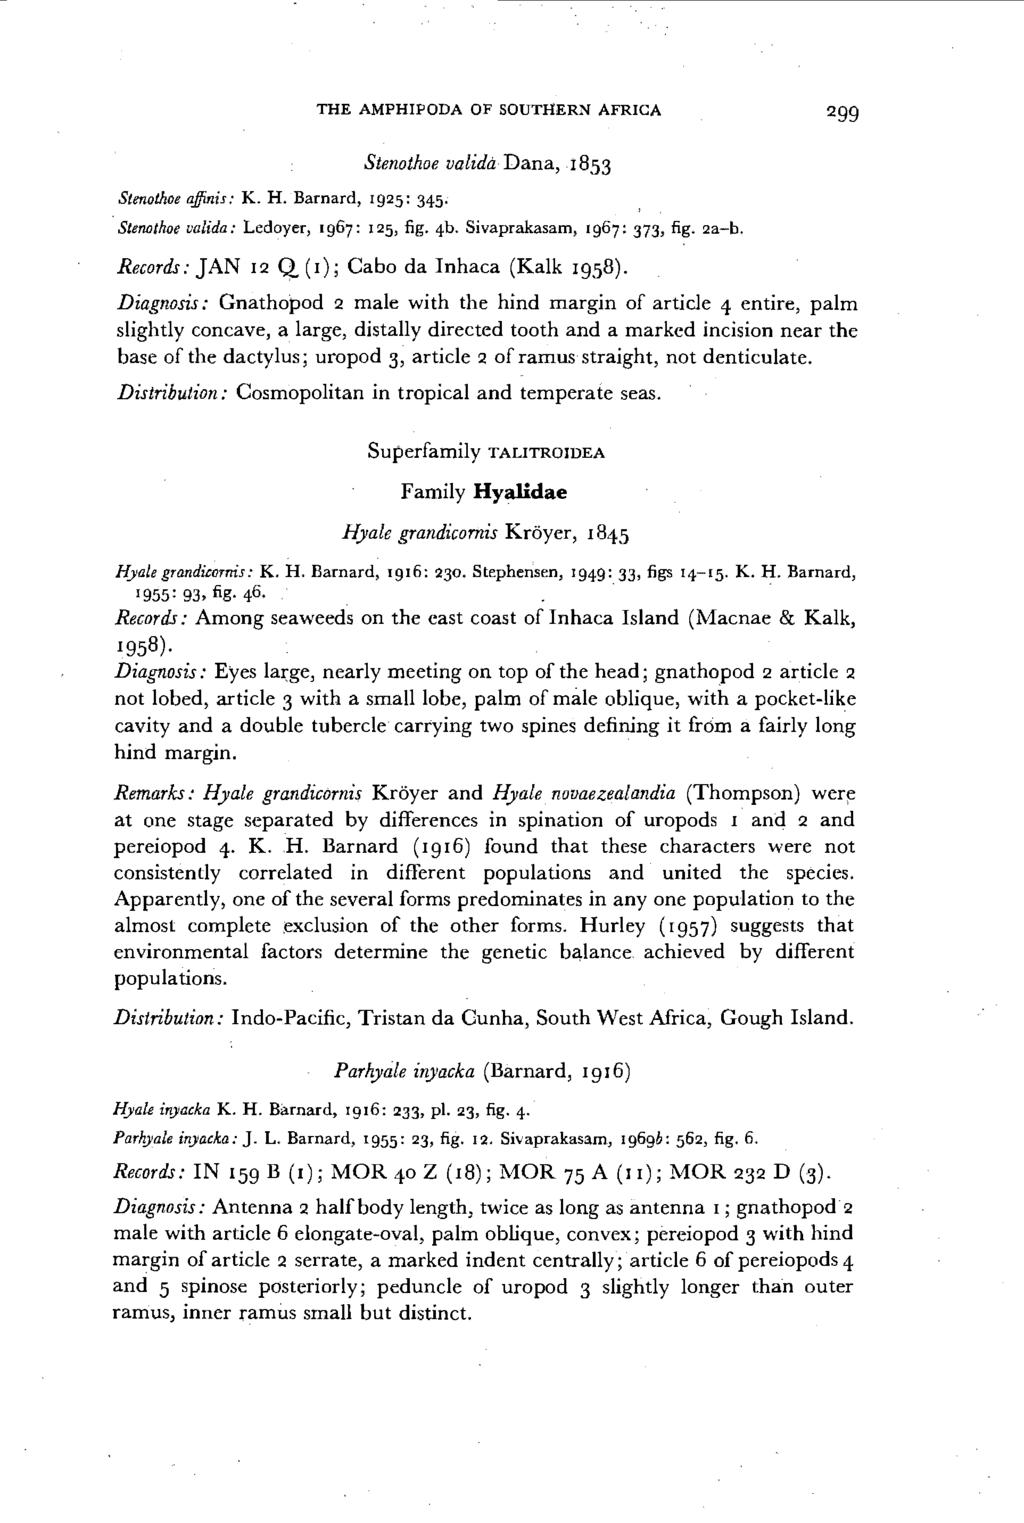 THE AMPHIPODA OF SOUTItERN AFRICA 299 Stenothoe alfinis: K. H. Barnard, 1925: 345; Stenothoe valida Dana, 1853. Steno/hoe valida: Ledoyer, 1967: 125, fig. 4b. Sivaprakasam, 1967: 373, fig. 2a-b.